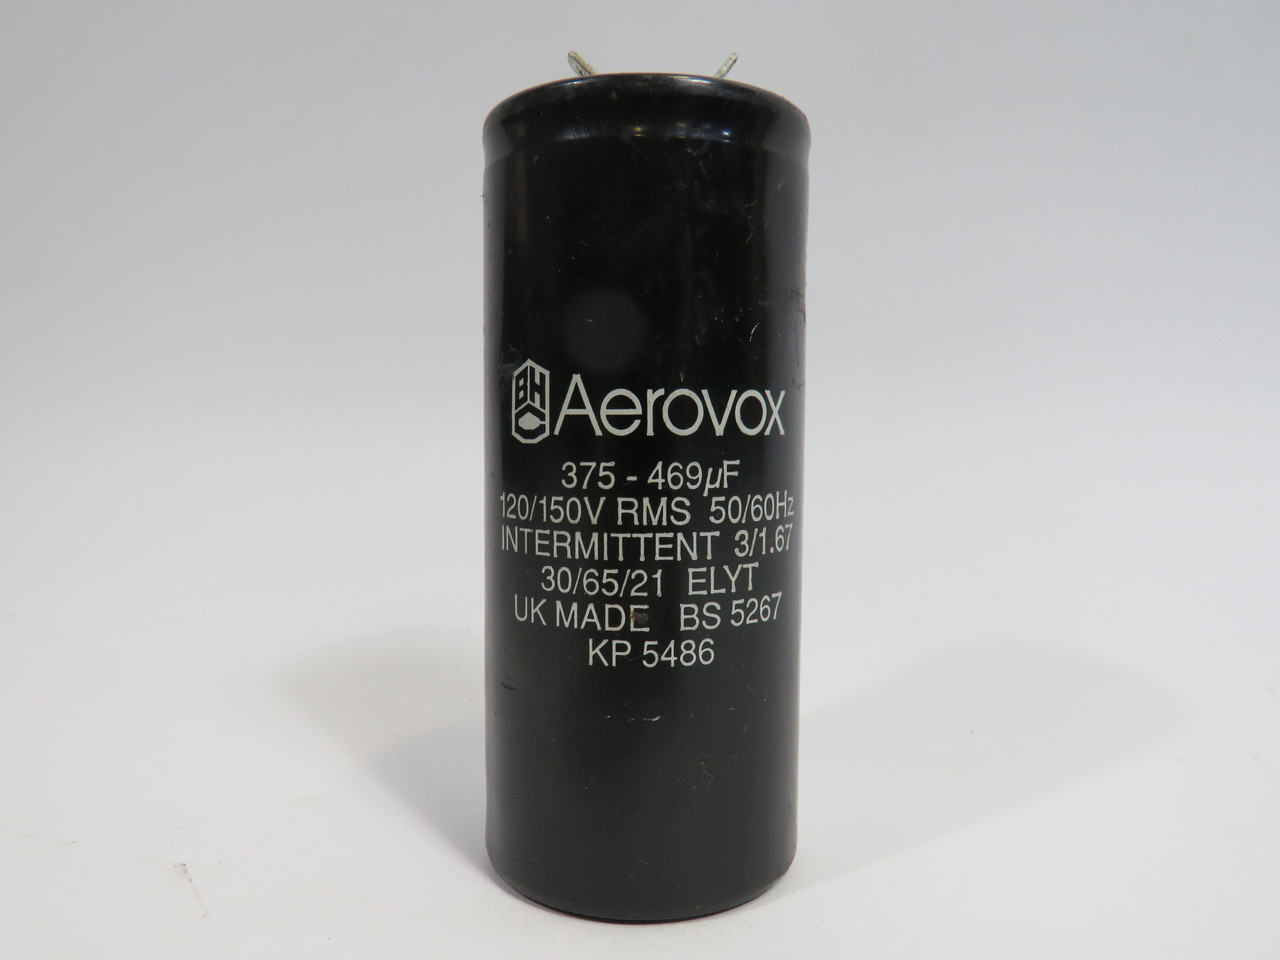 Aerovox Capacitor 375-469uF 120/150V 50/60Hz COSMETIC DAMAGE USED